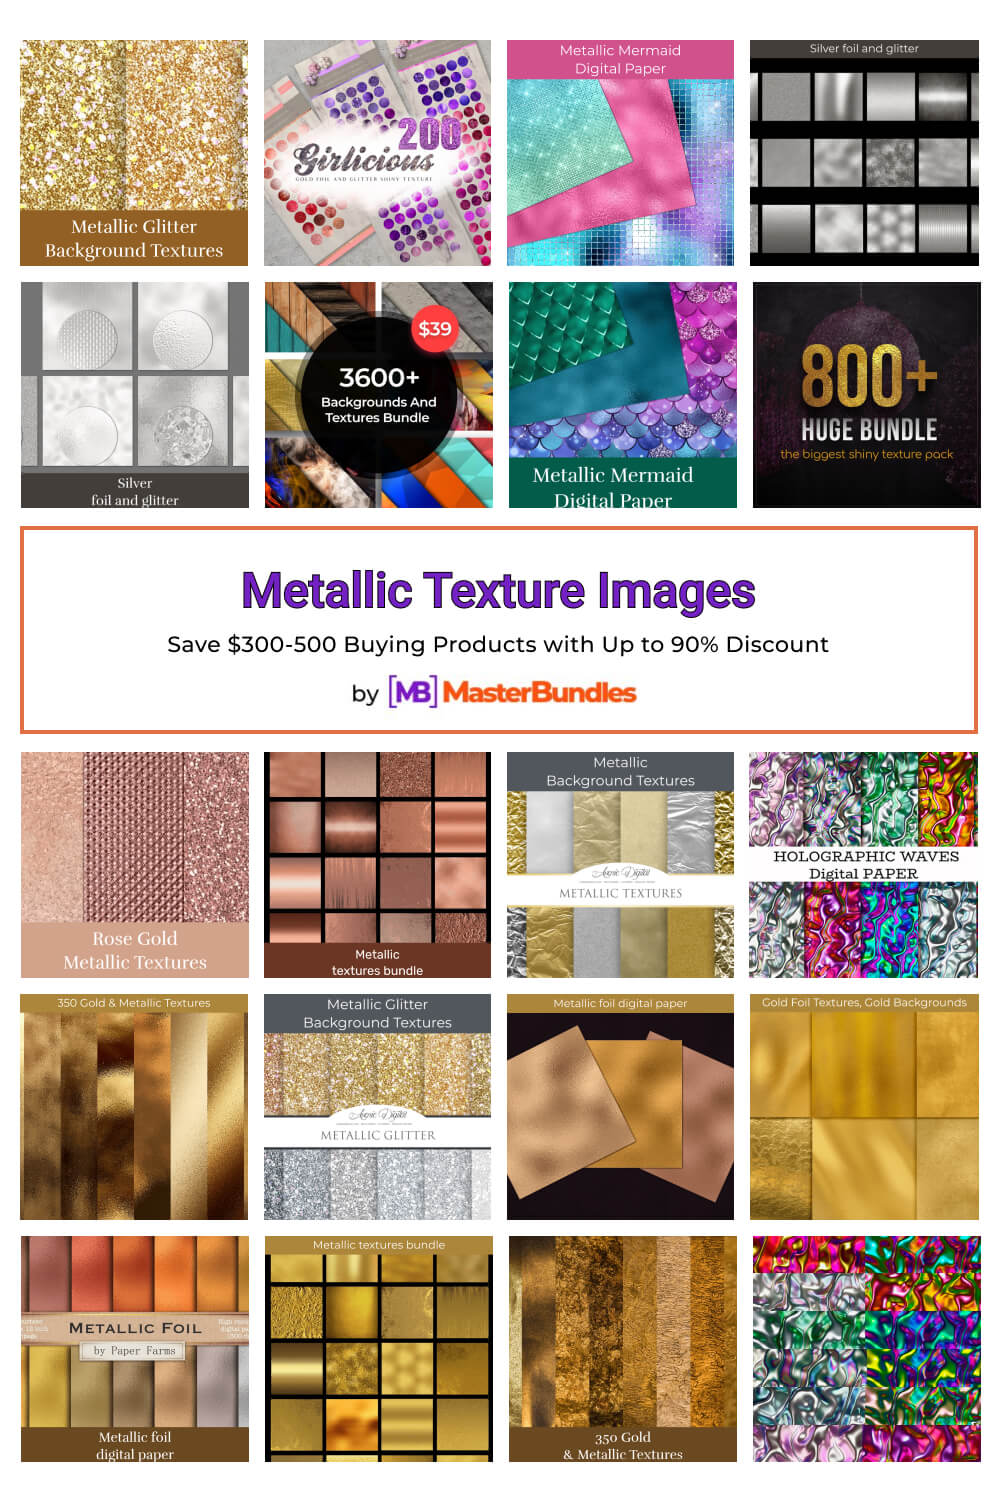 metallic texture images pinterest image.